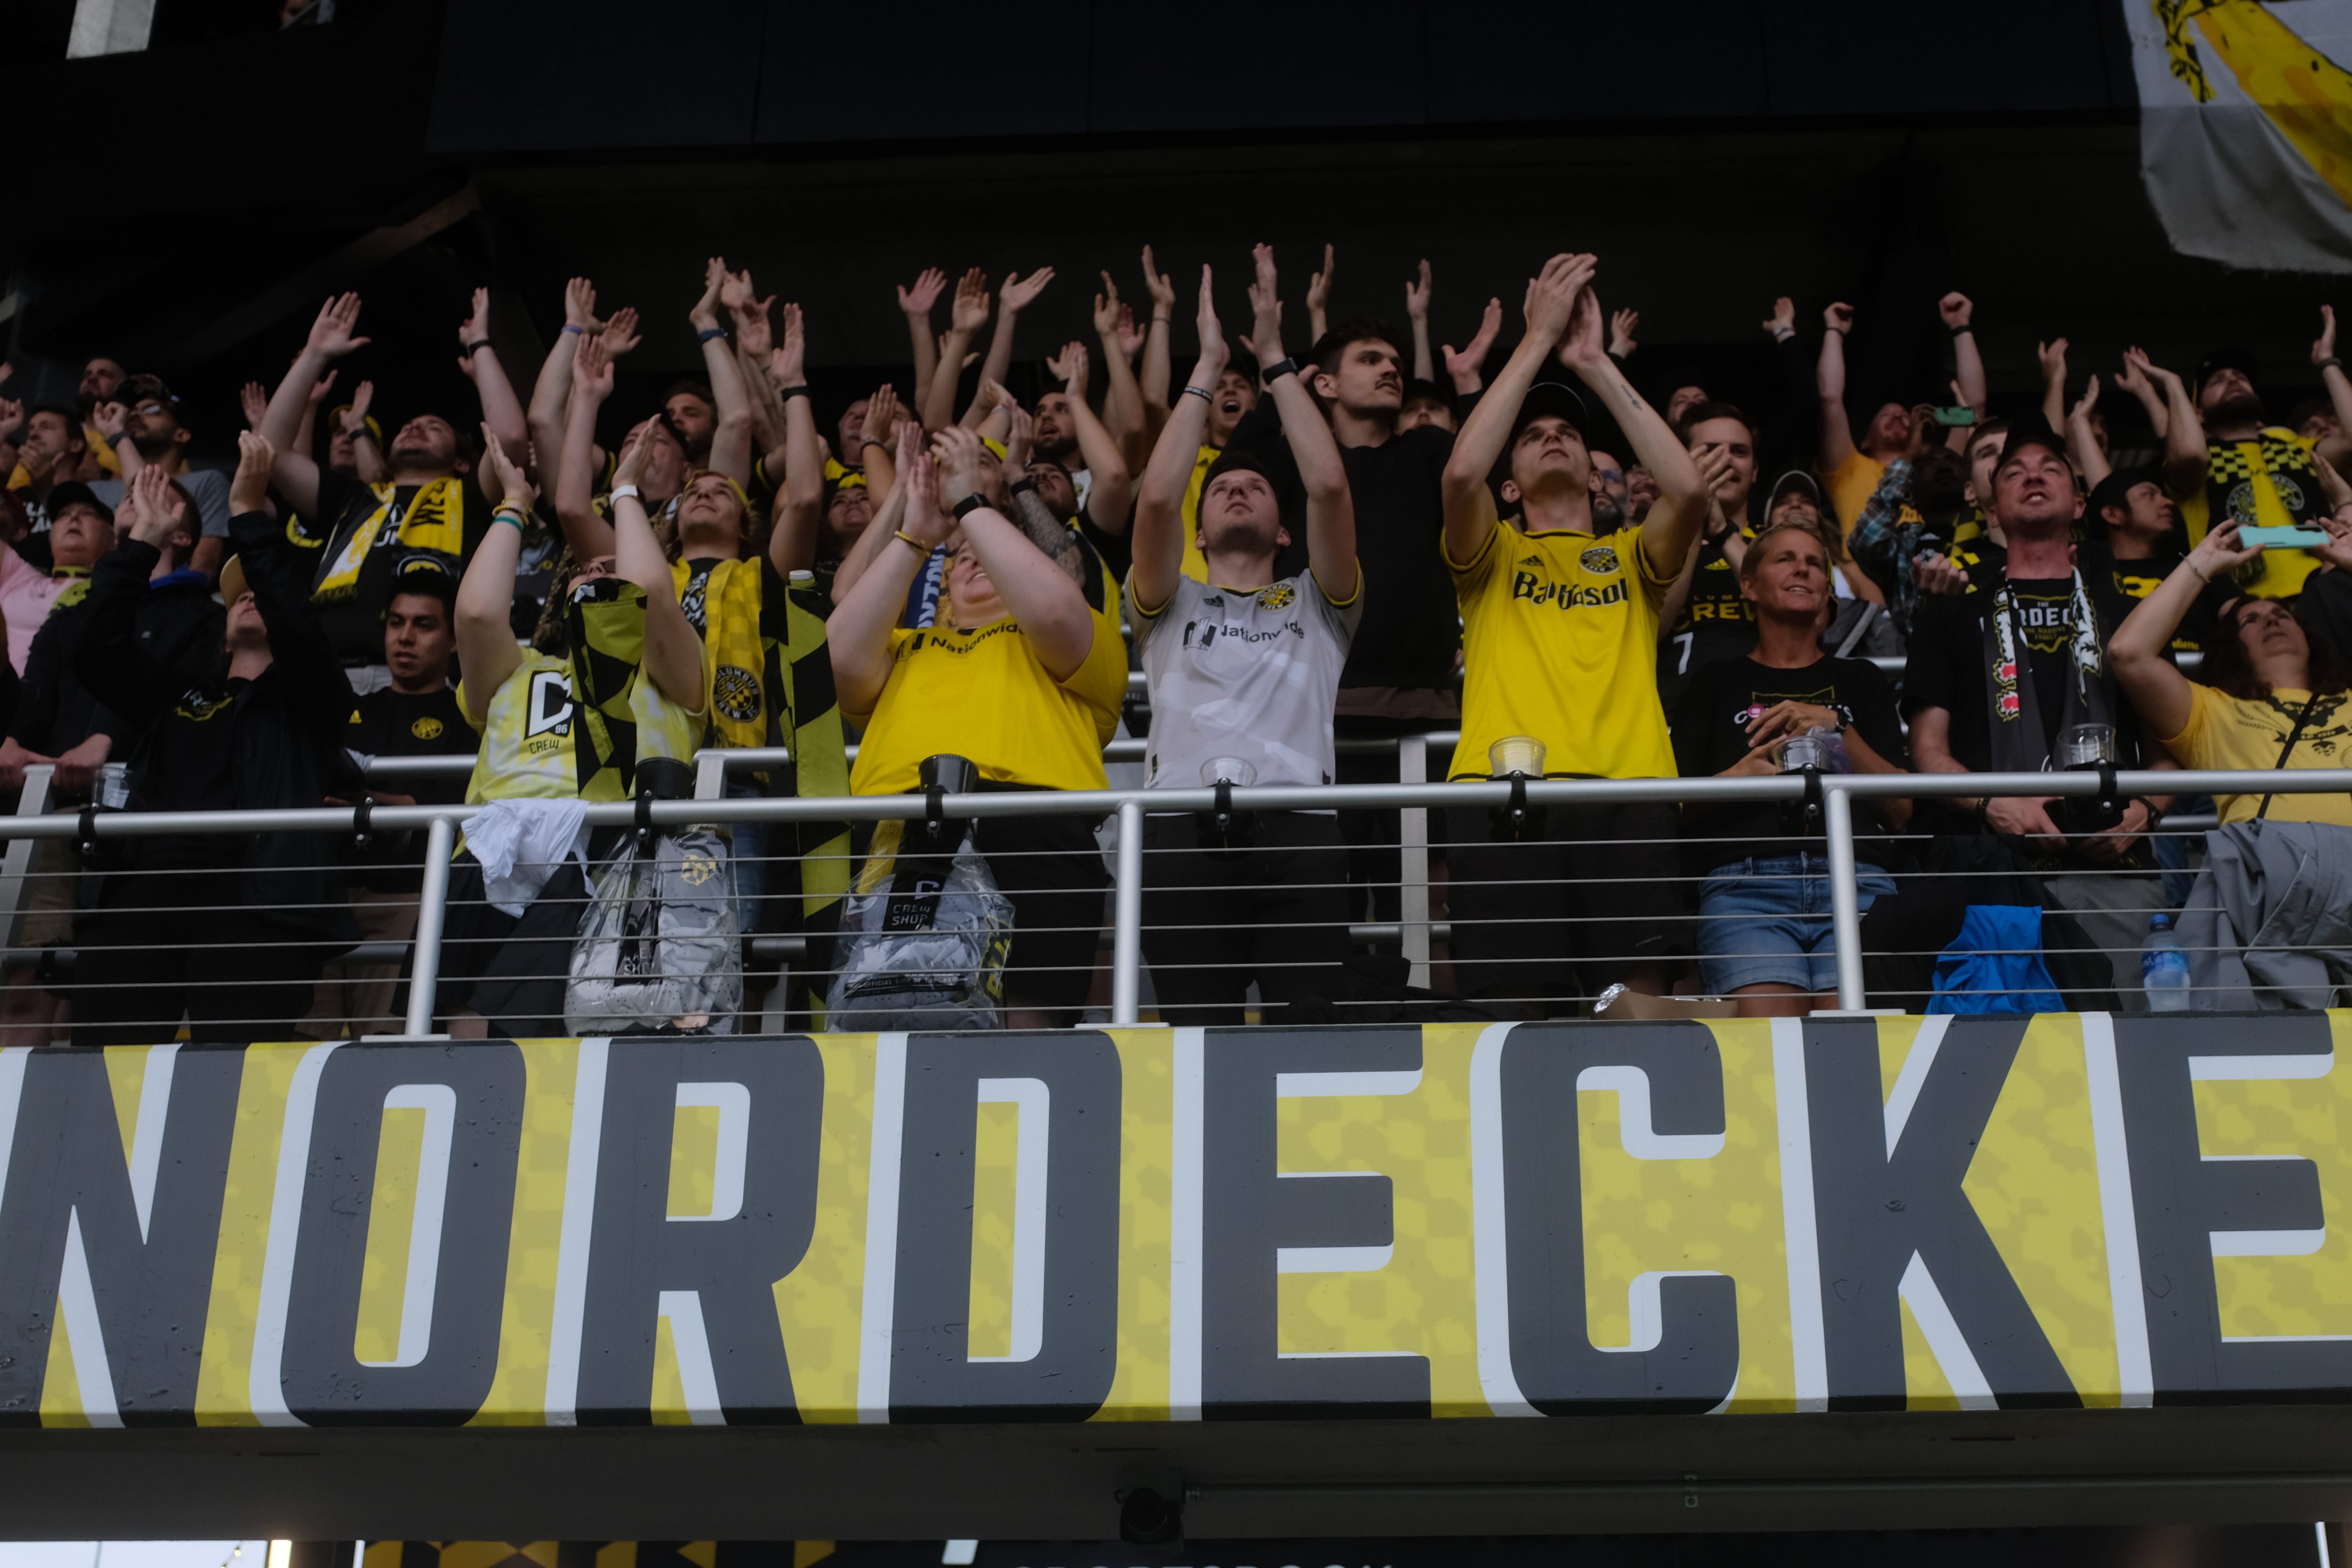 The Nordecke cheering on the Crew in Ohio